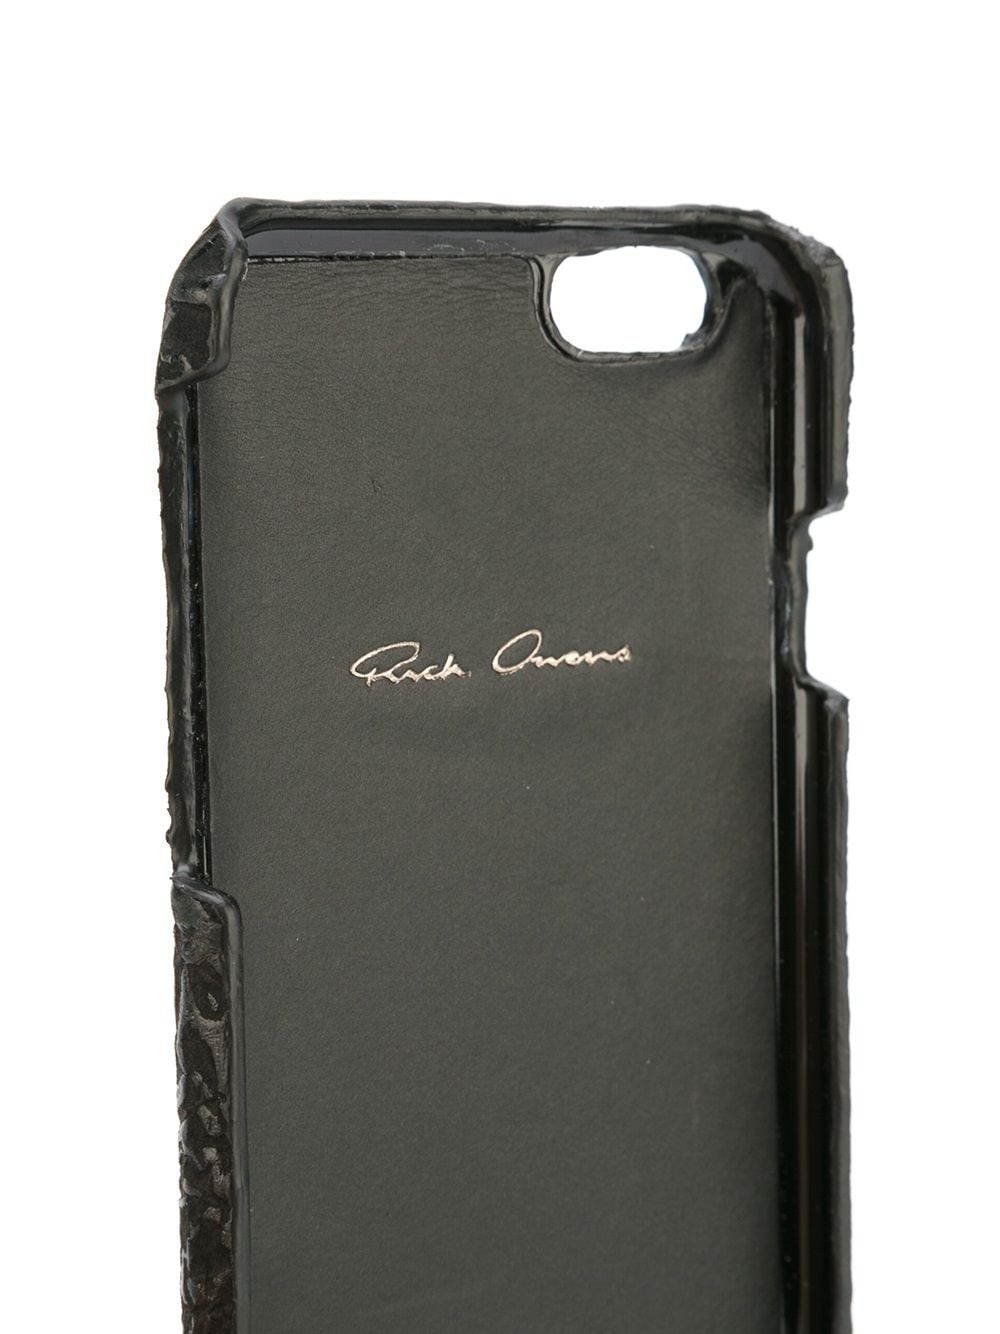 textured iPhone 6 case - 3